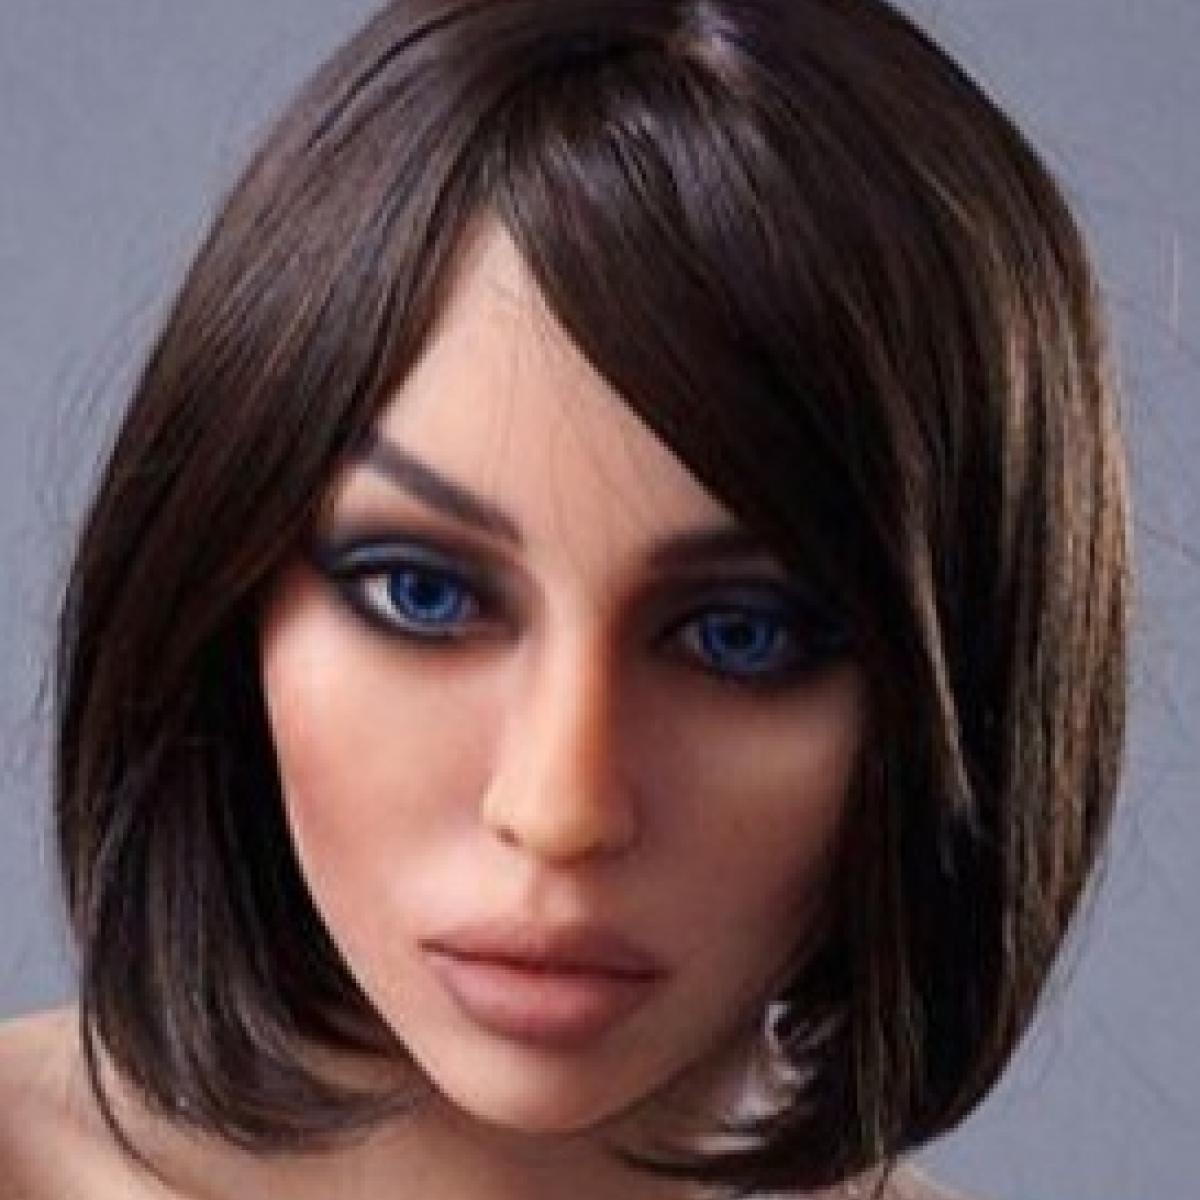 Neodoll Racy - Natalia - Sex Doll Head - M16 Compatible - Tan